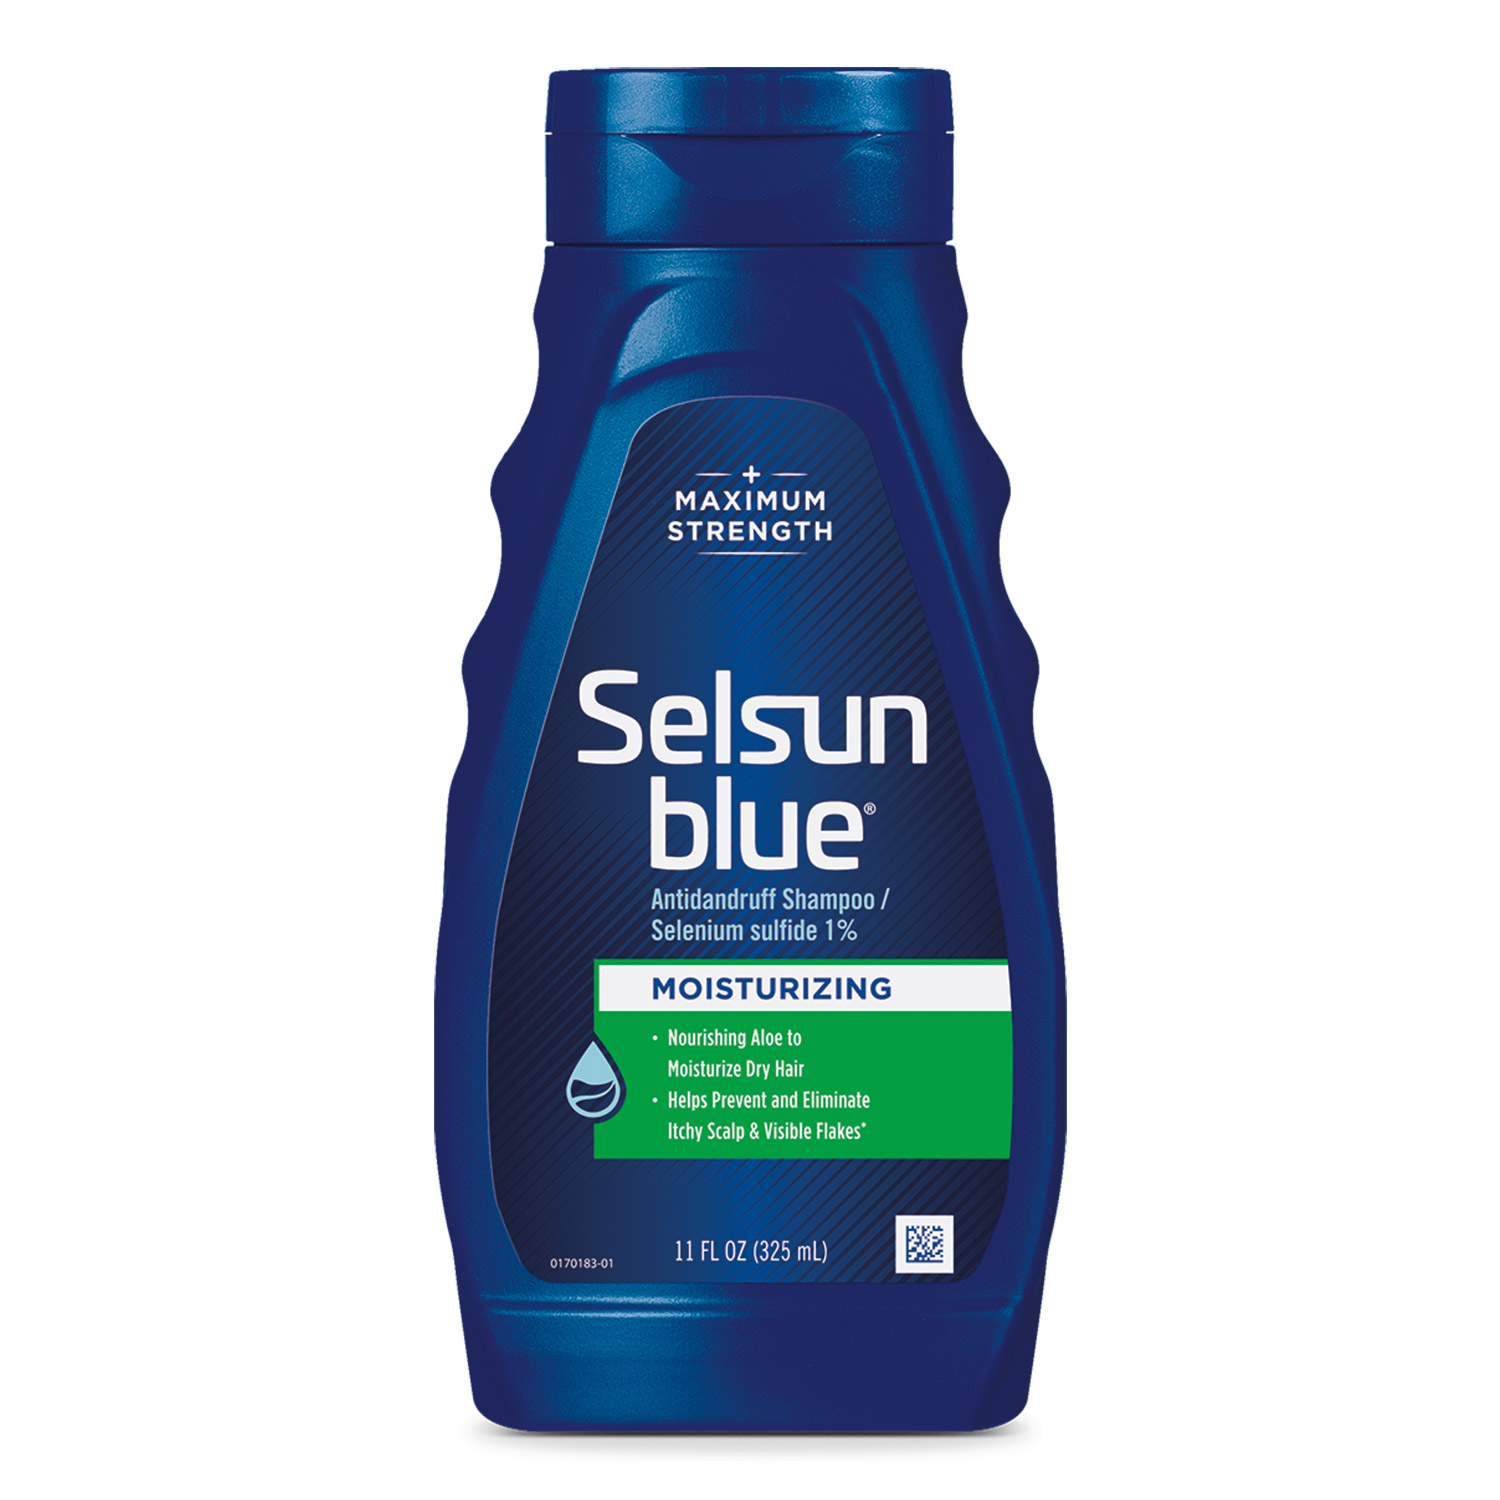 Selsun Blue Men's Moisturizing Anti-Dandruff Shampoo for Itchy and Dry Scalp Relief, Maximum Strength, 1% Selenium Sulfide, 11 fl oz - image 1 of 8